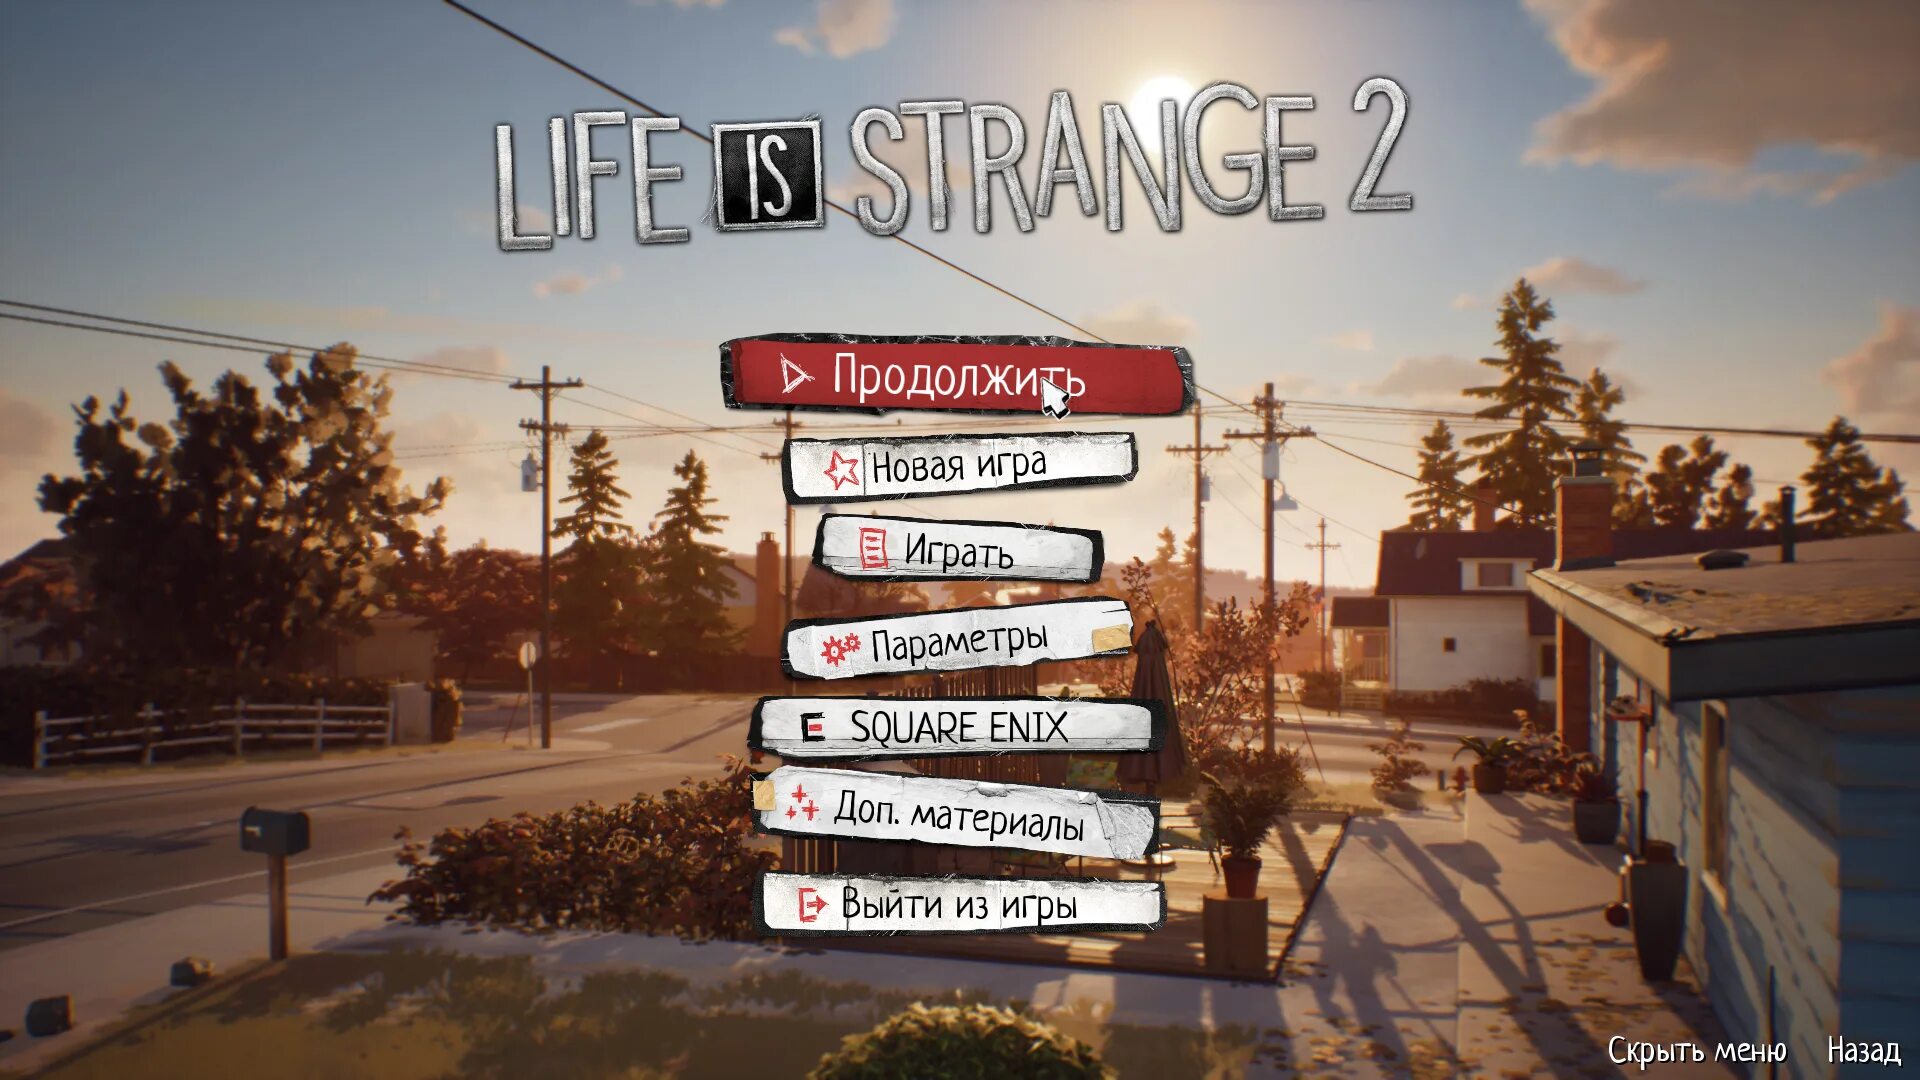 Start strange. Life is Strange меню. Игра Life is Strange 2. Life is Strange 2 menu. Life is Strange эпизод 2.